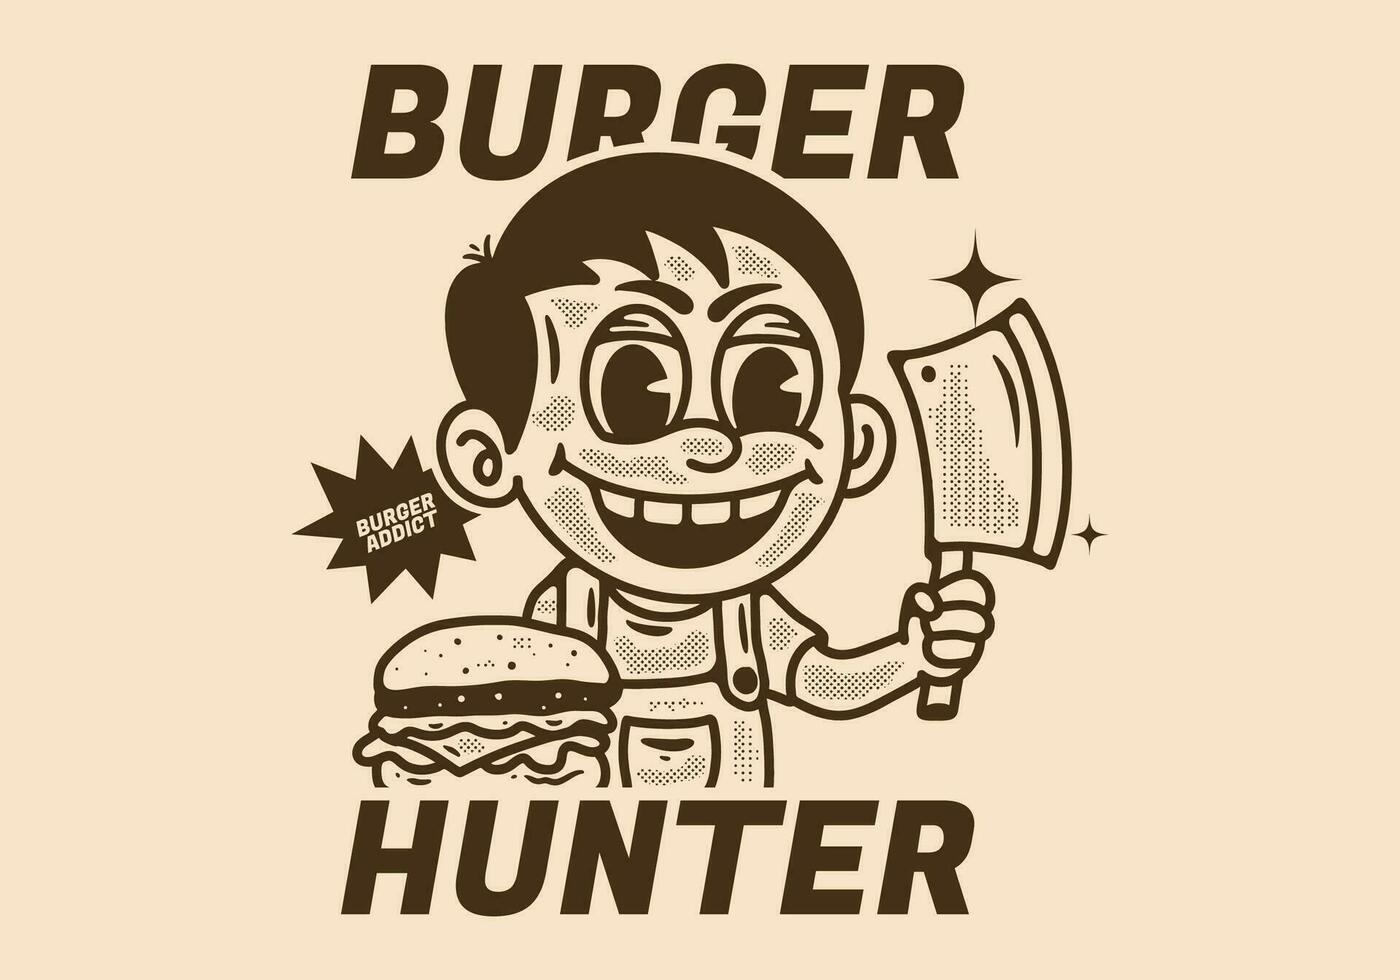 Burger hunter, illustration of a boy holding butcher knife with burger in front of him vector